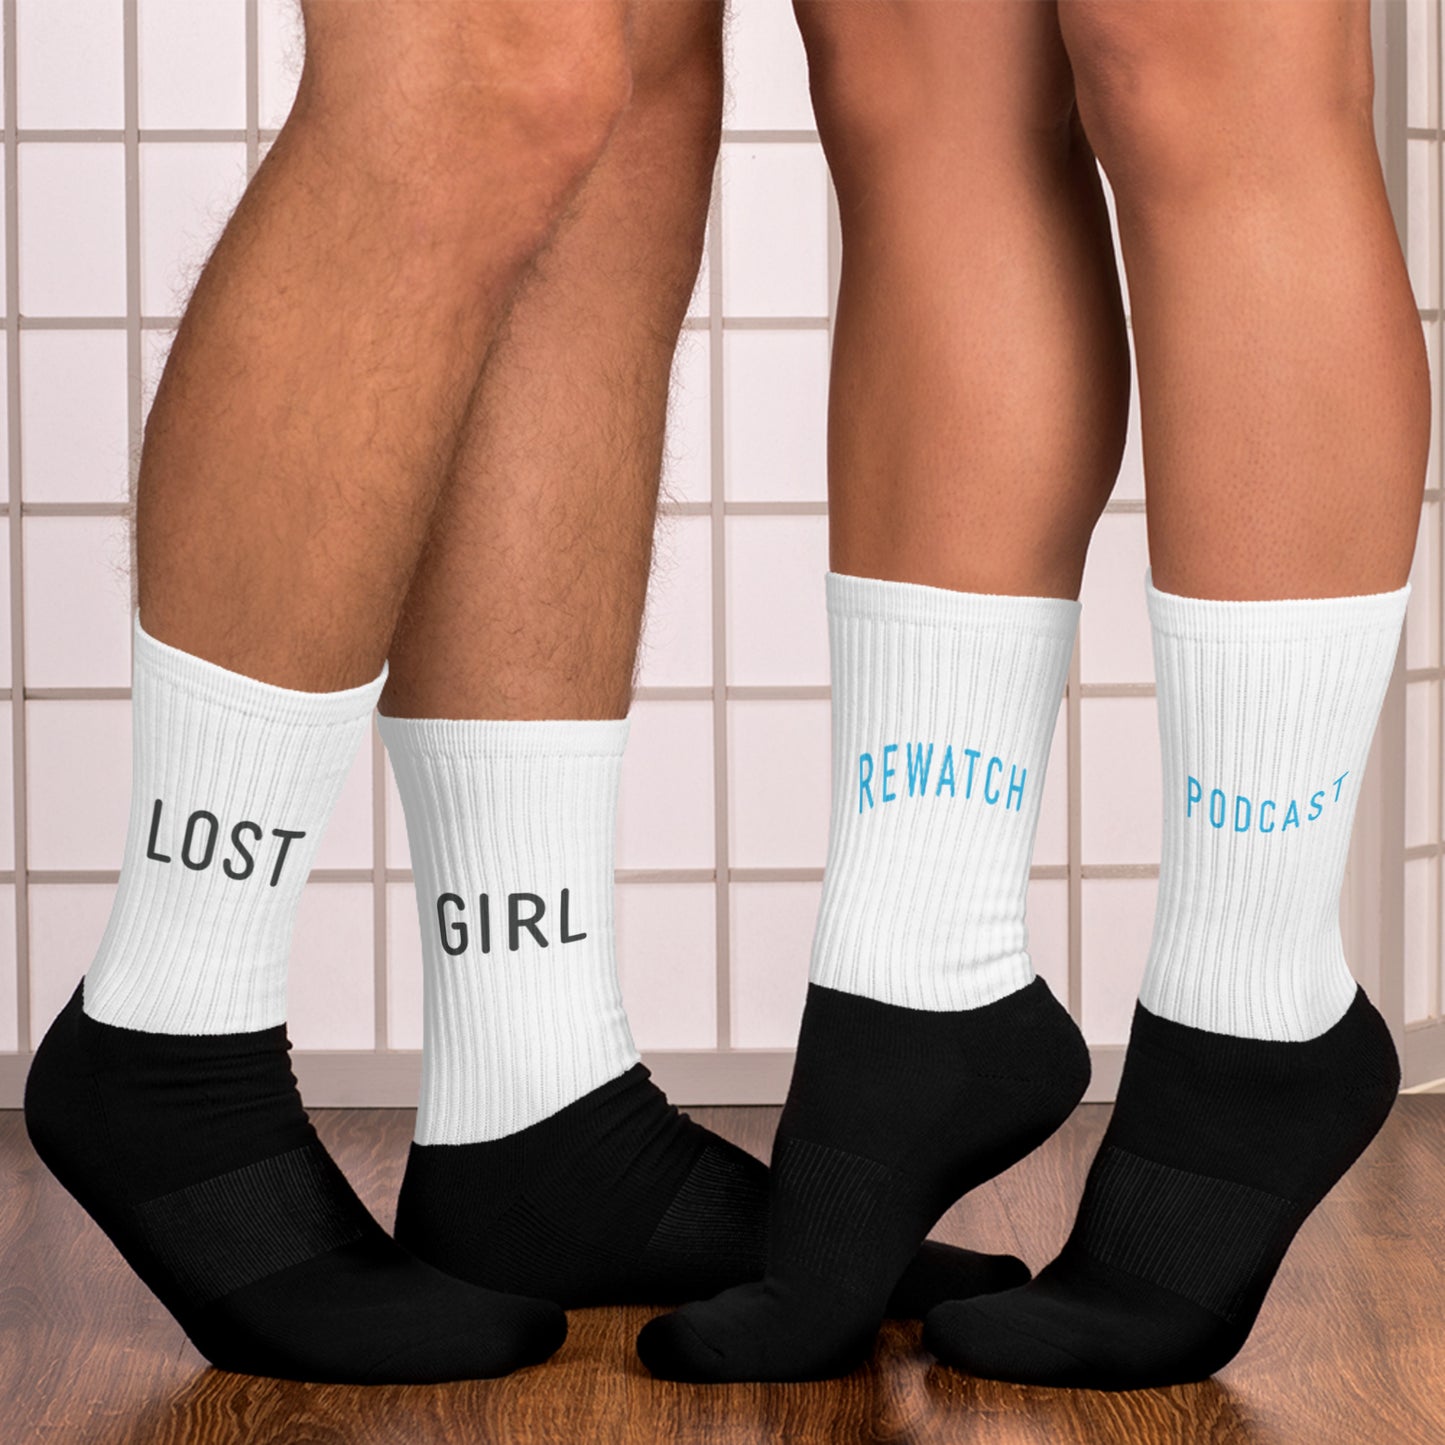 Lost Girl Rewatch Podcast Socks